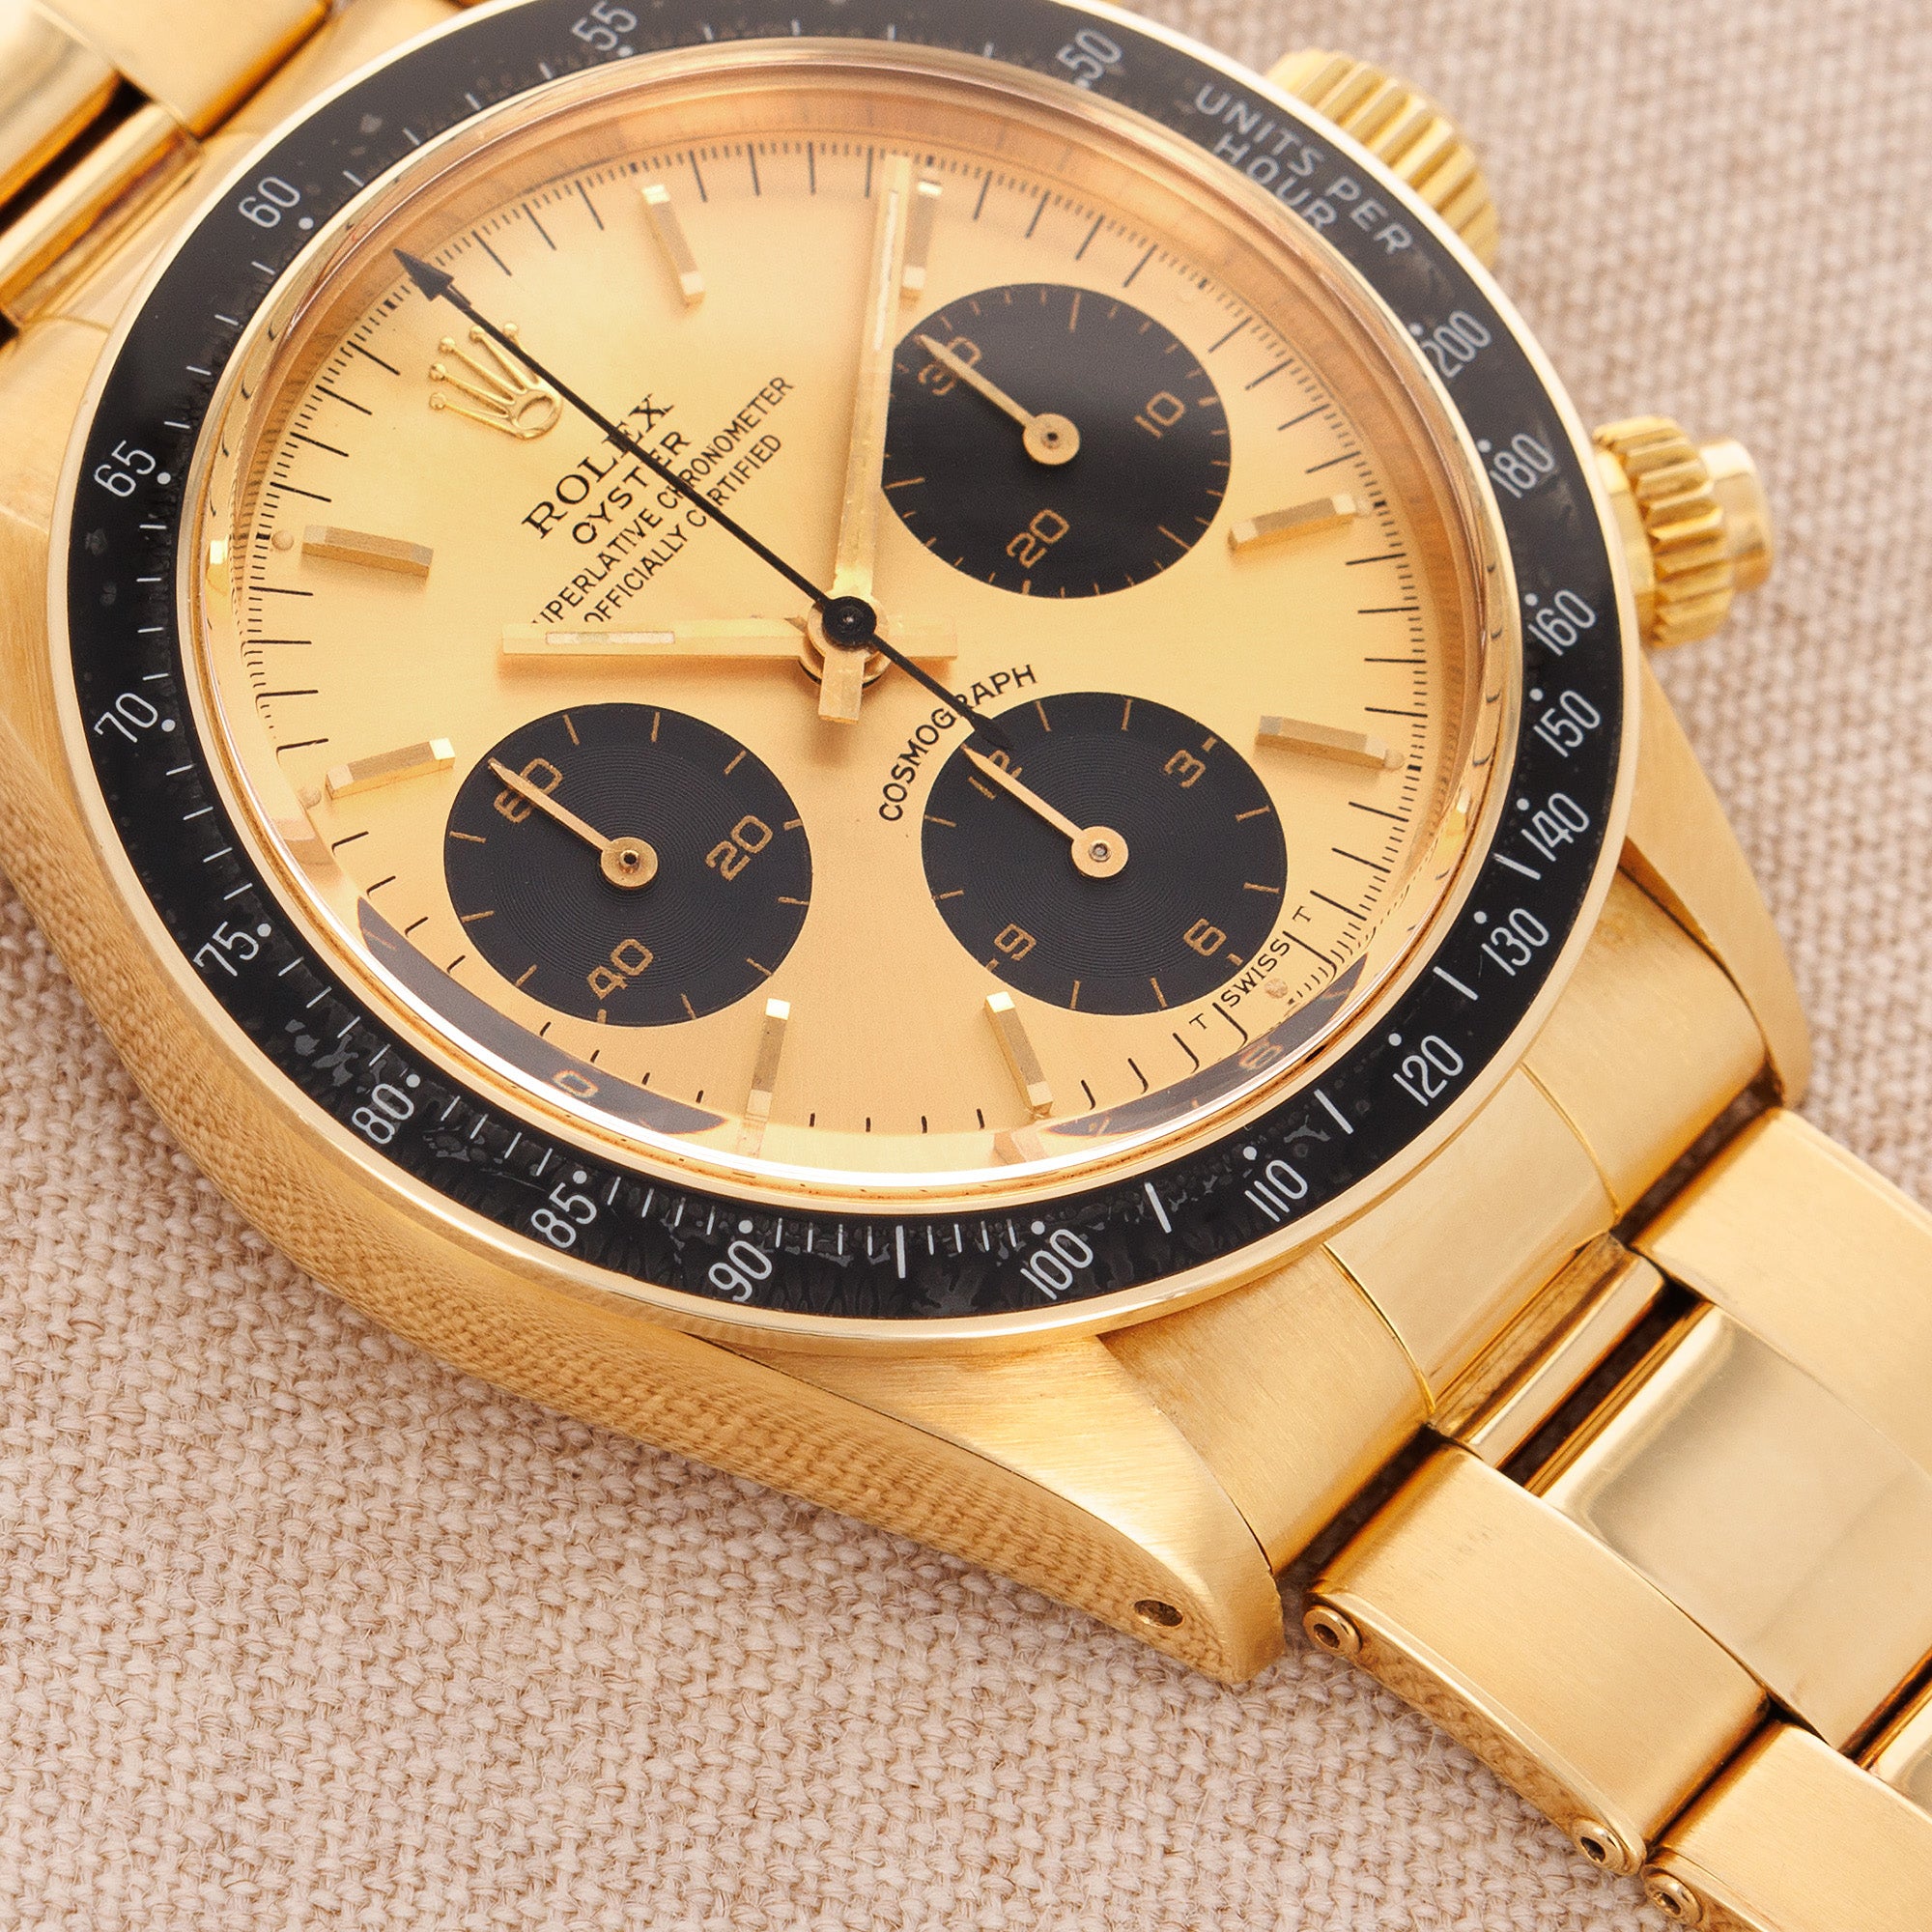 Rolex - Rolex Yellow Gold Cosmograph Daytona Watch Ref. 6263 - The Keystone Watches